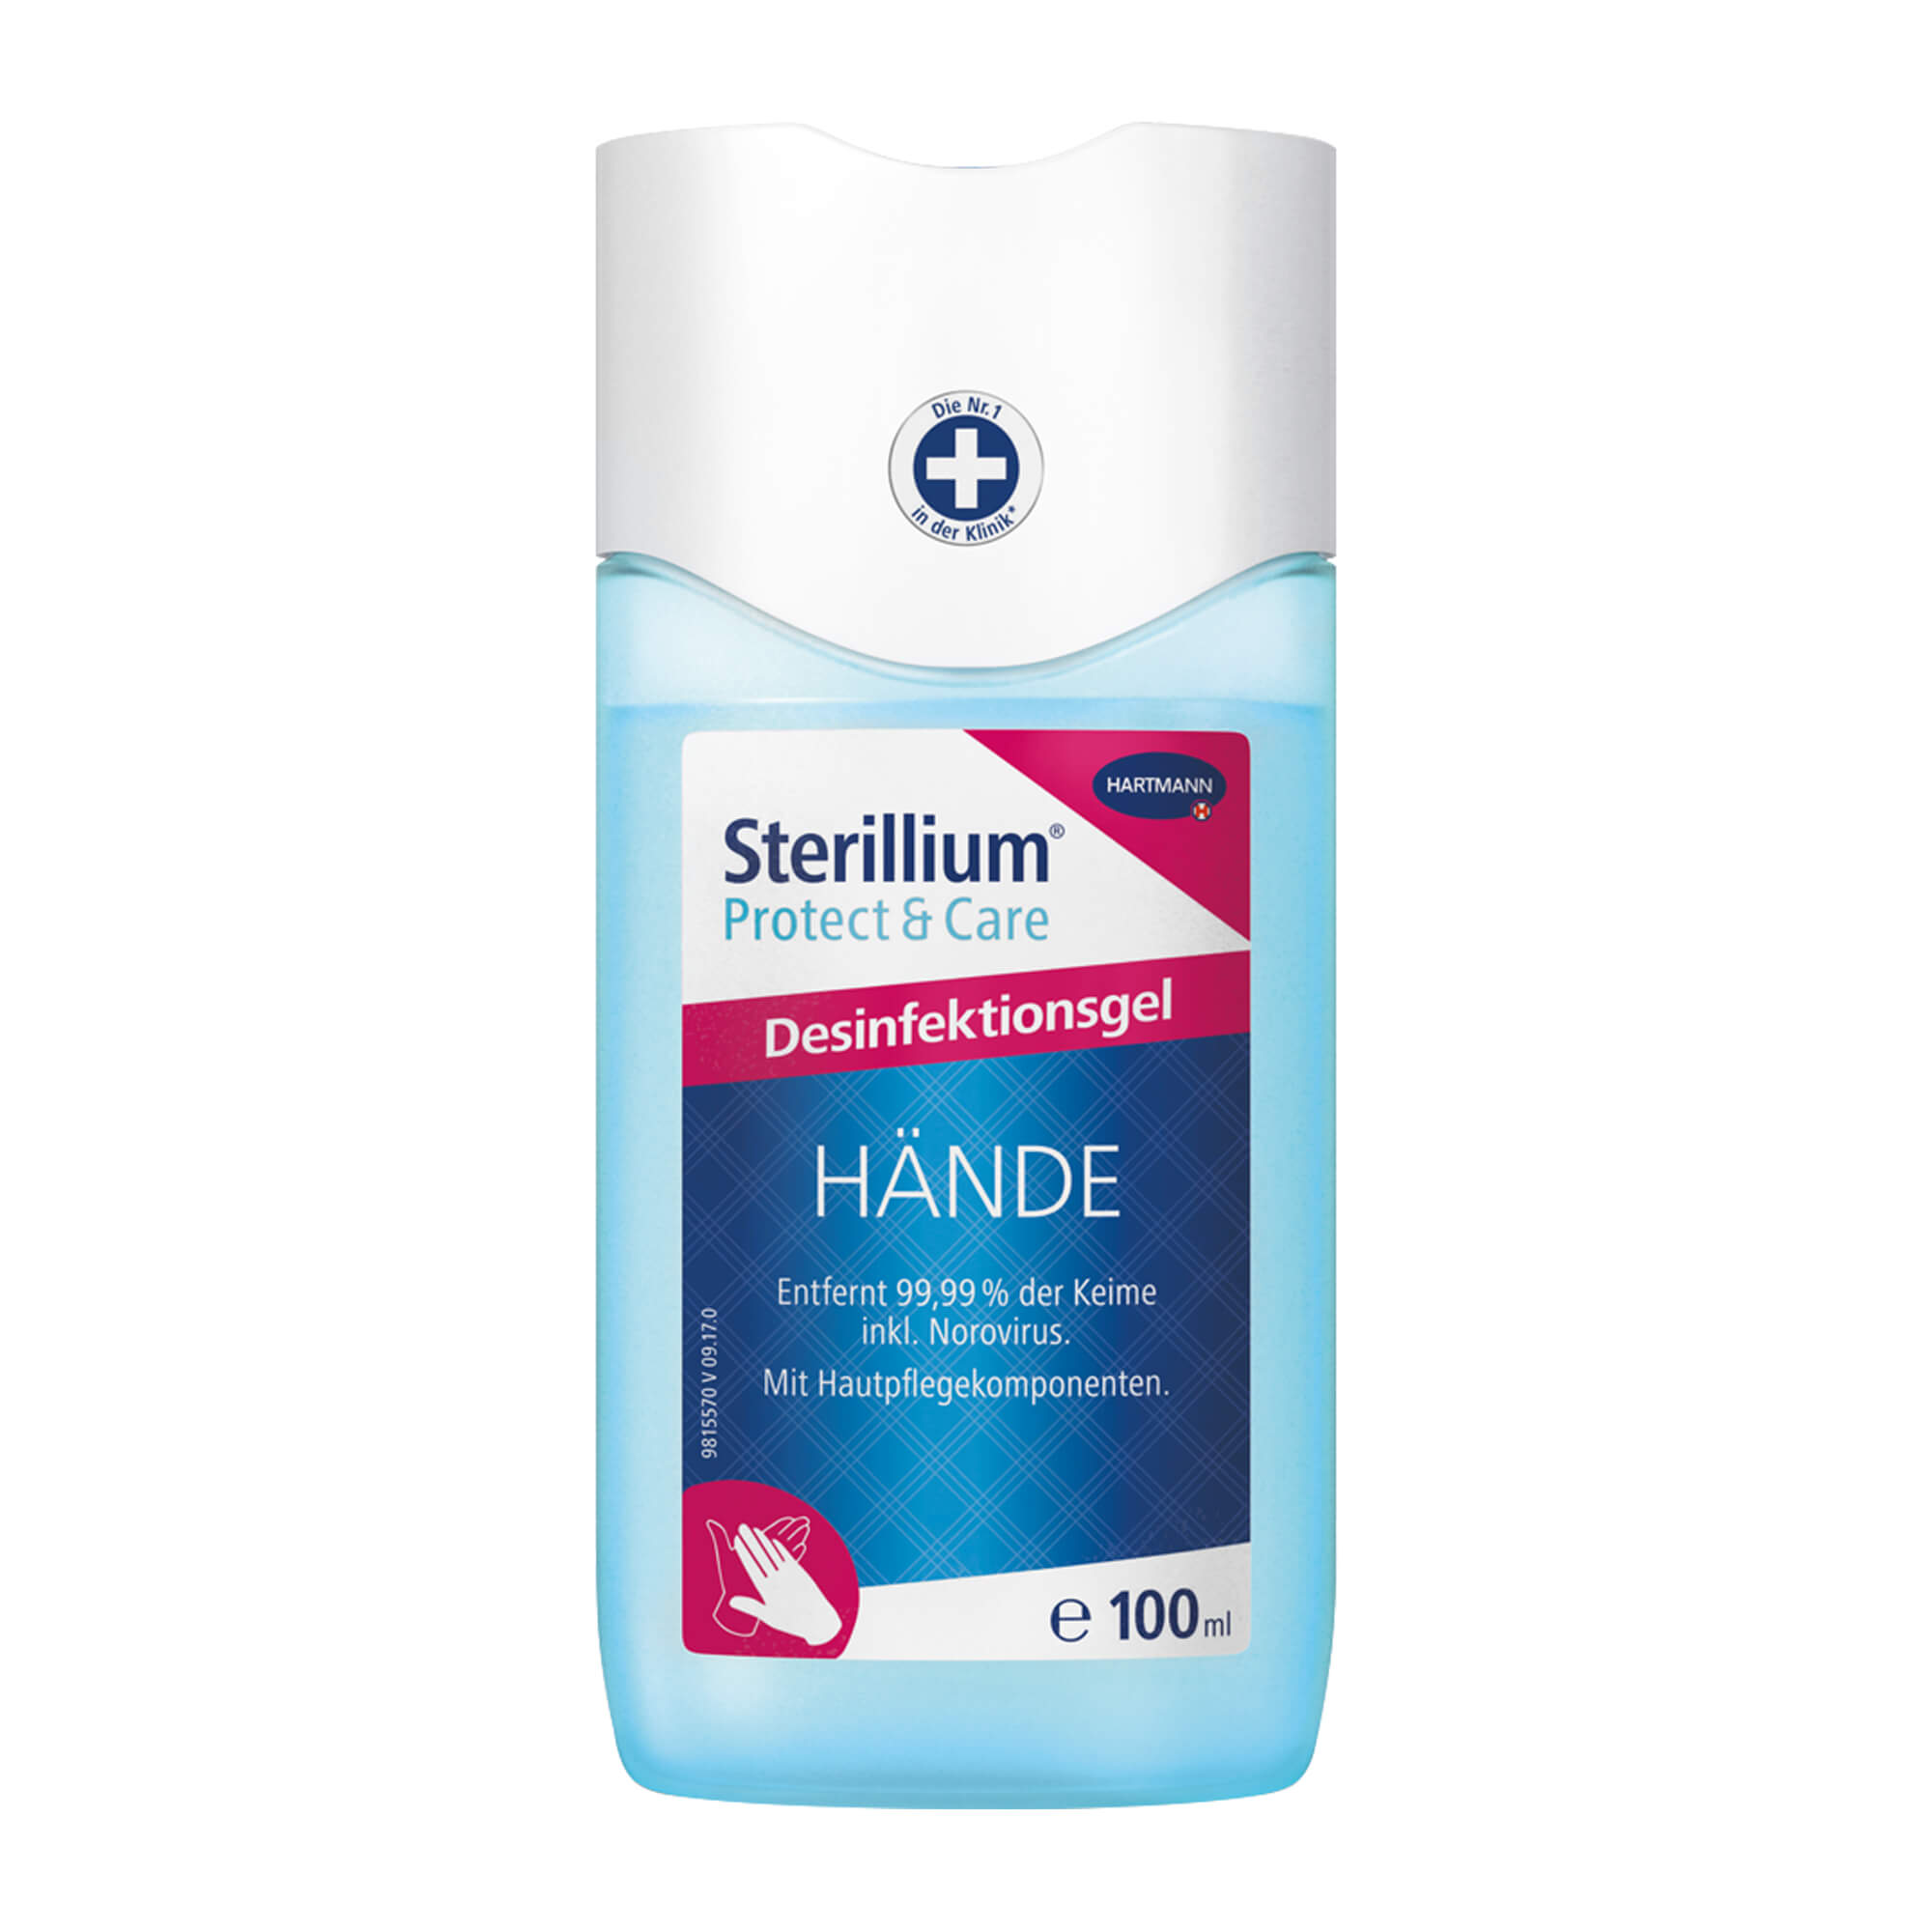 Sterillium Protect & Care Hände Desinfektionsgel